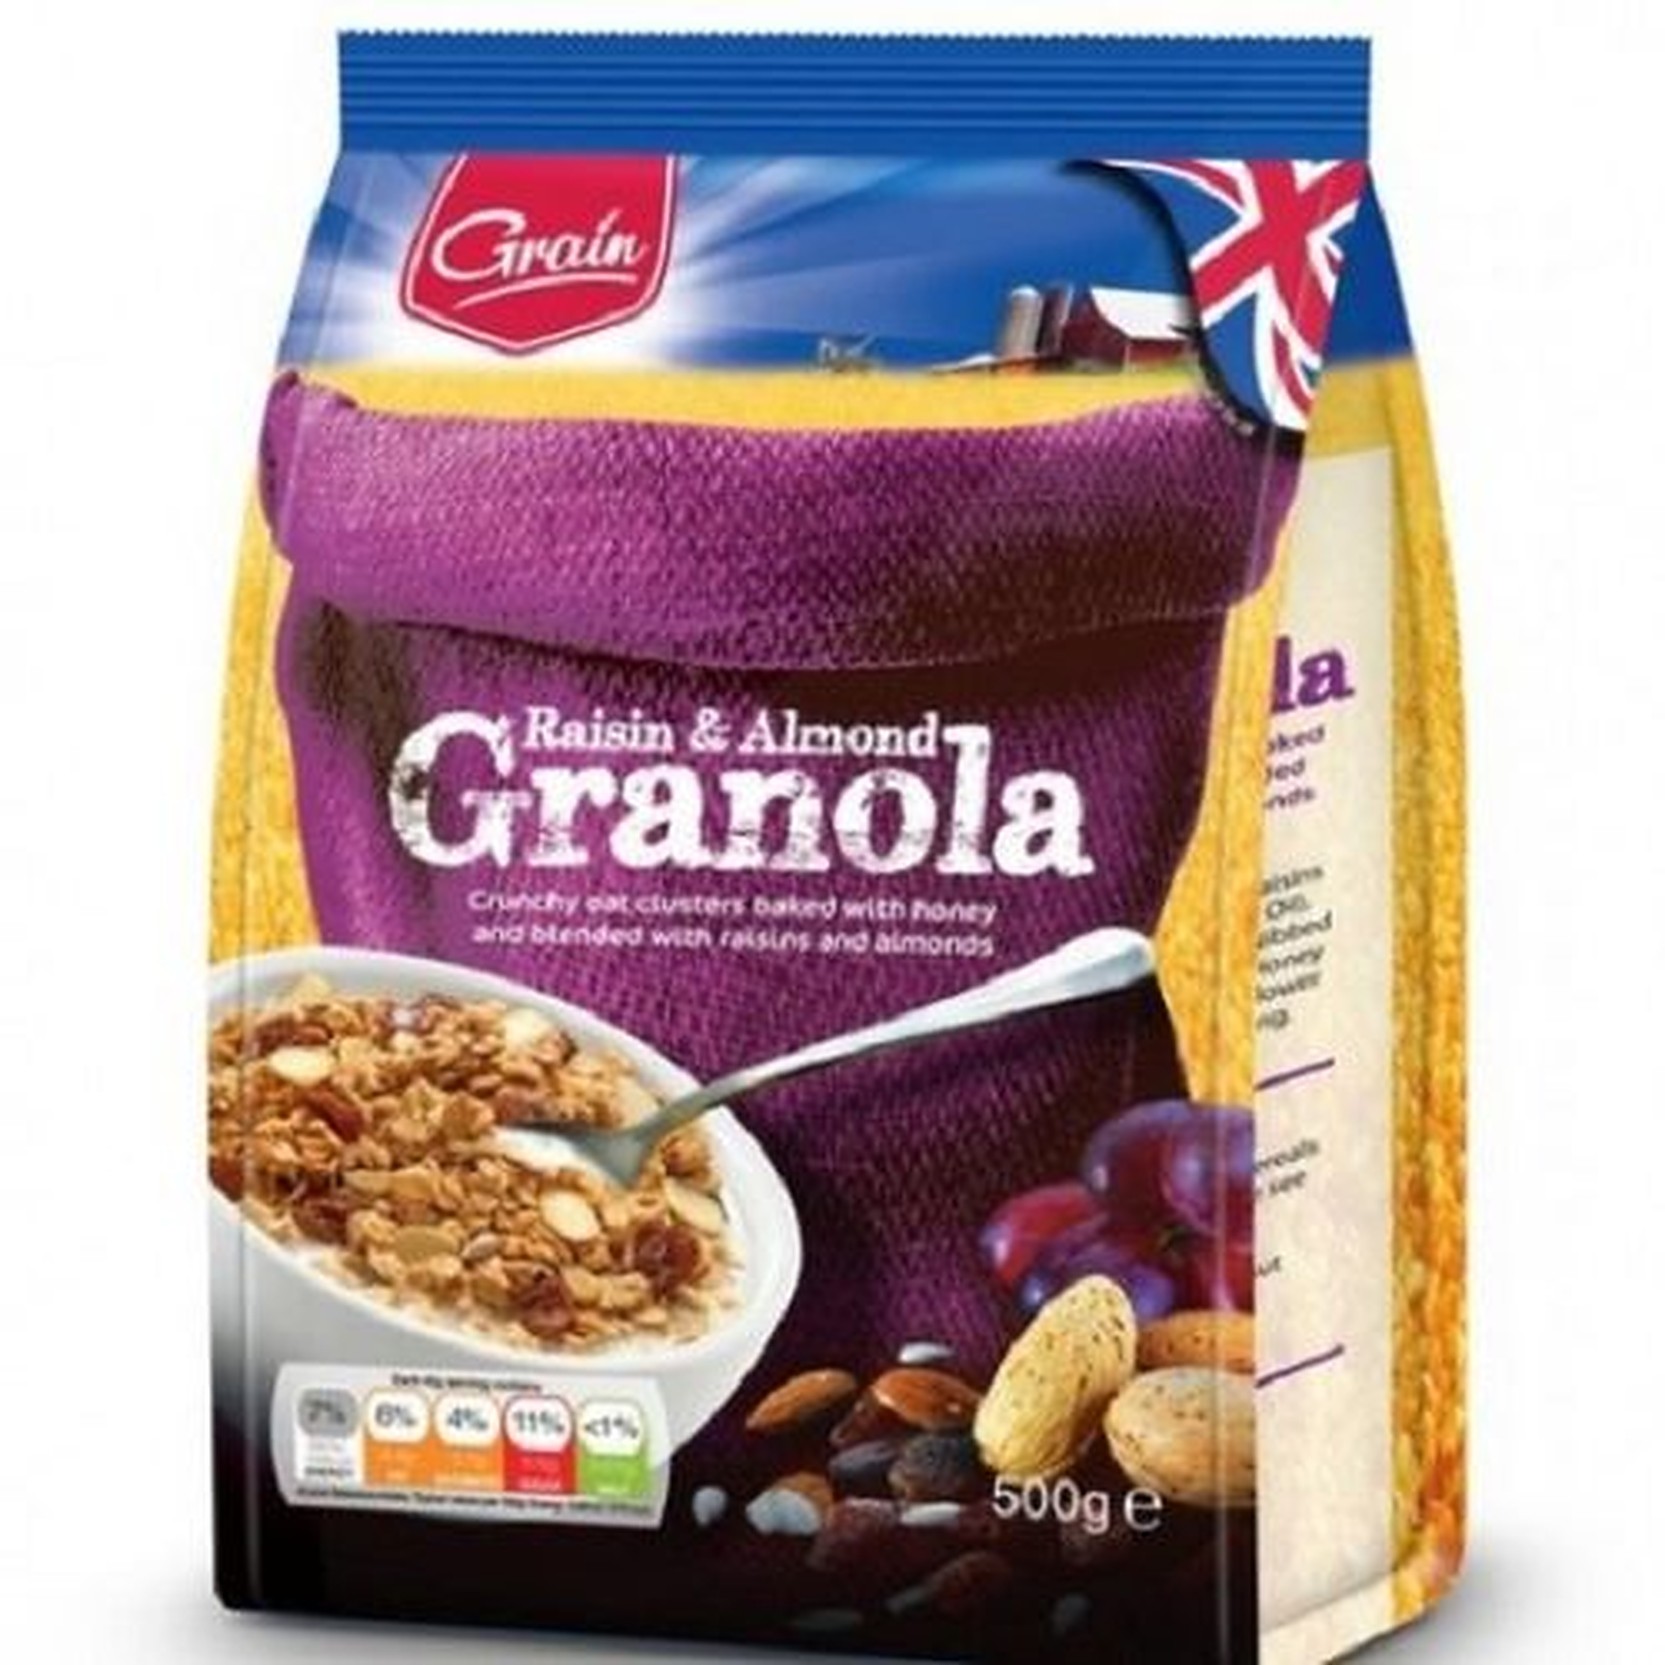 Grain Granola Raisin & Almond Oats x500g